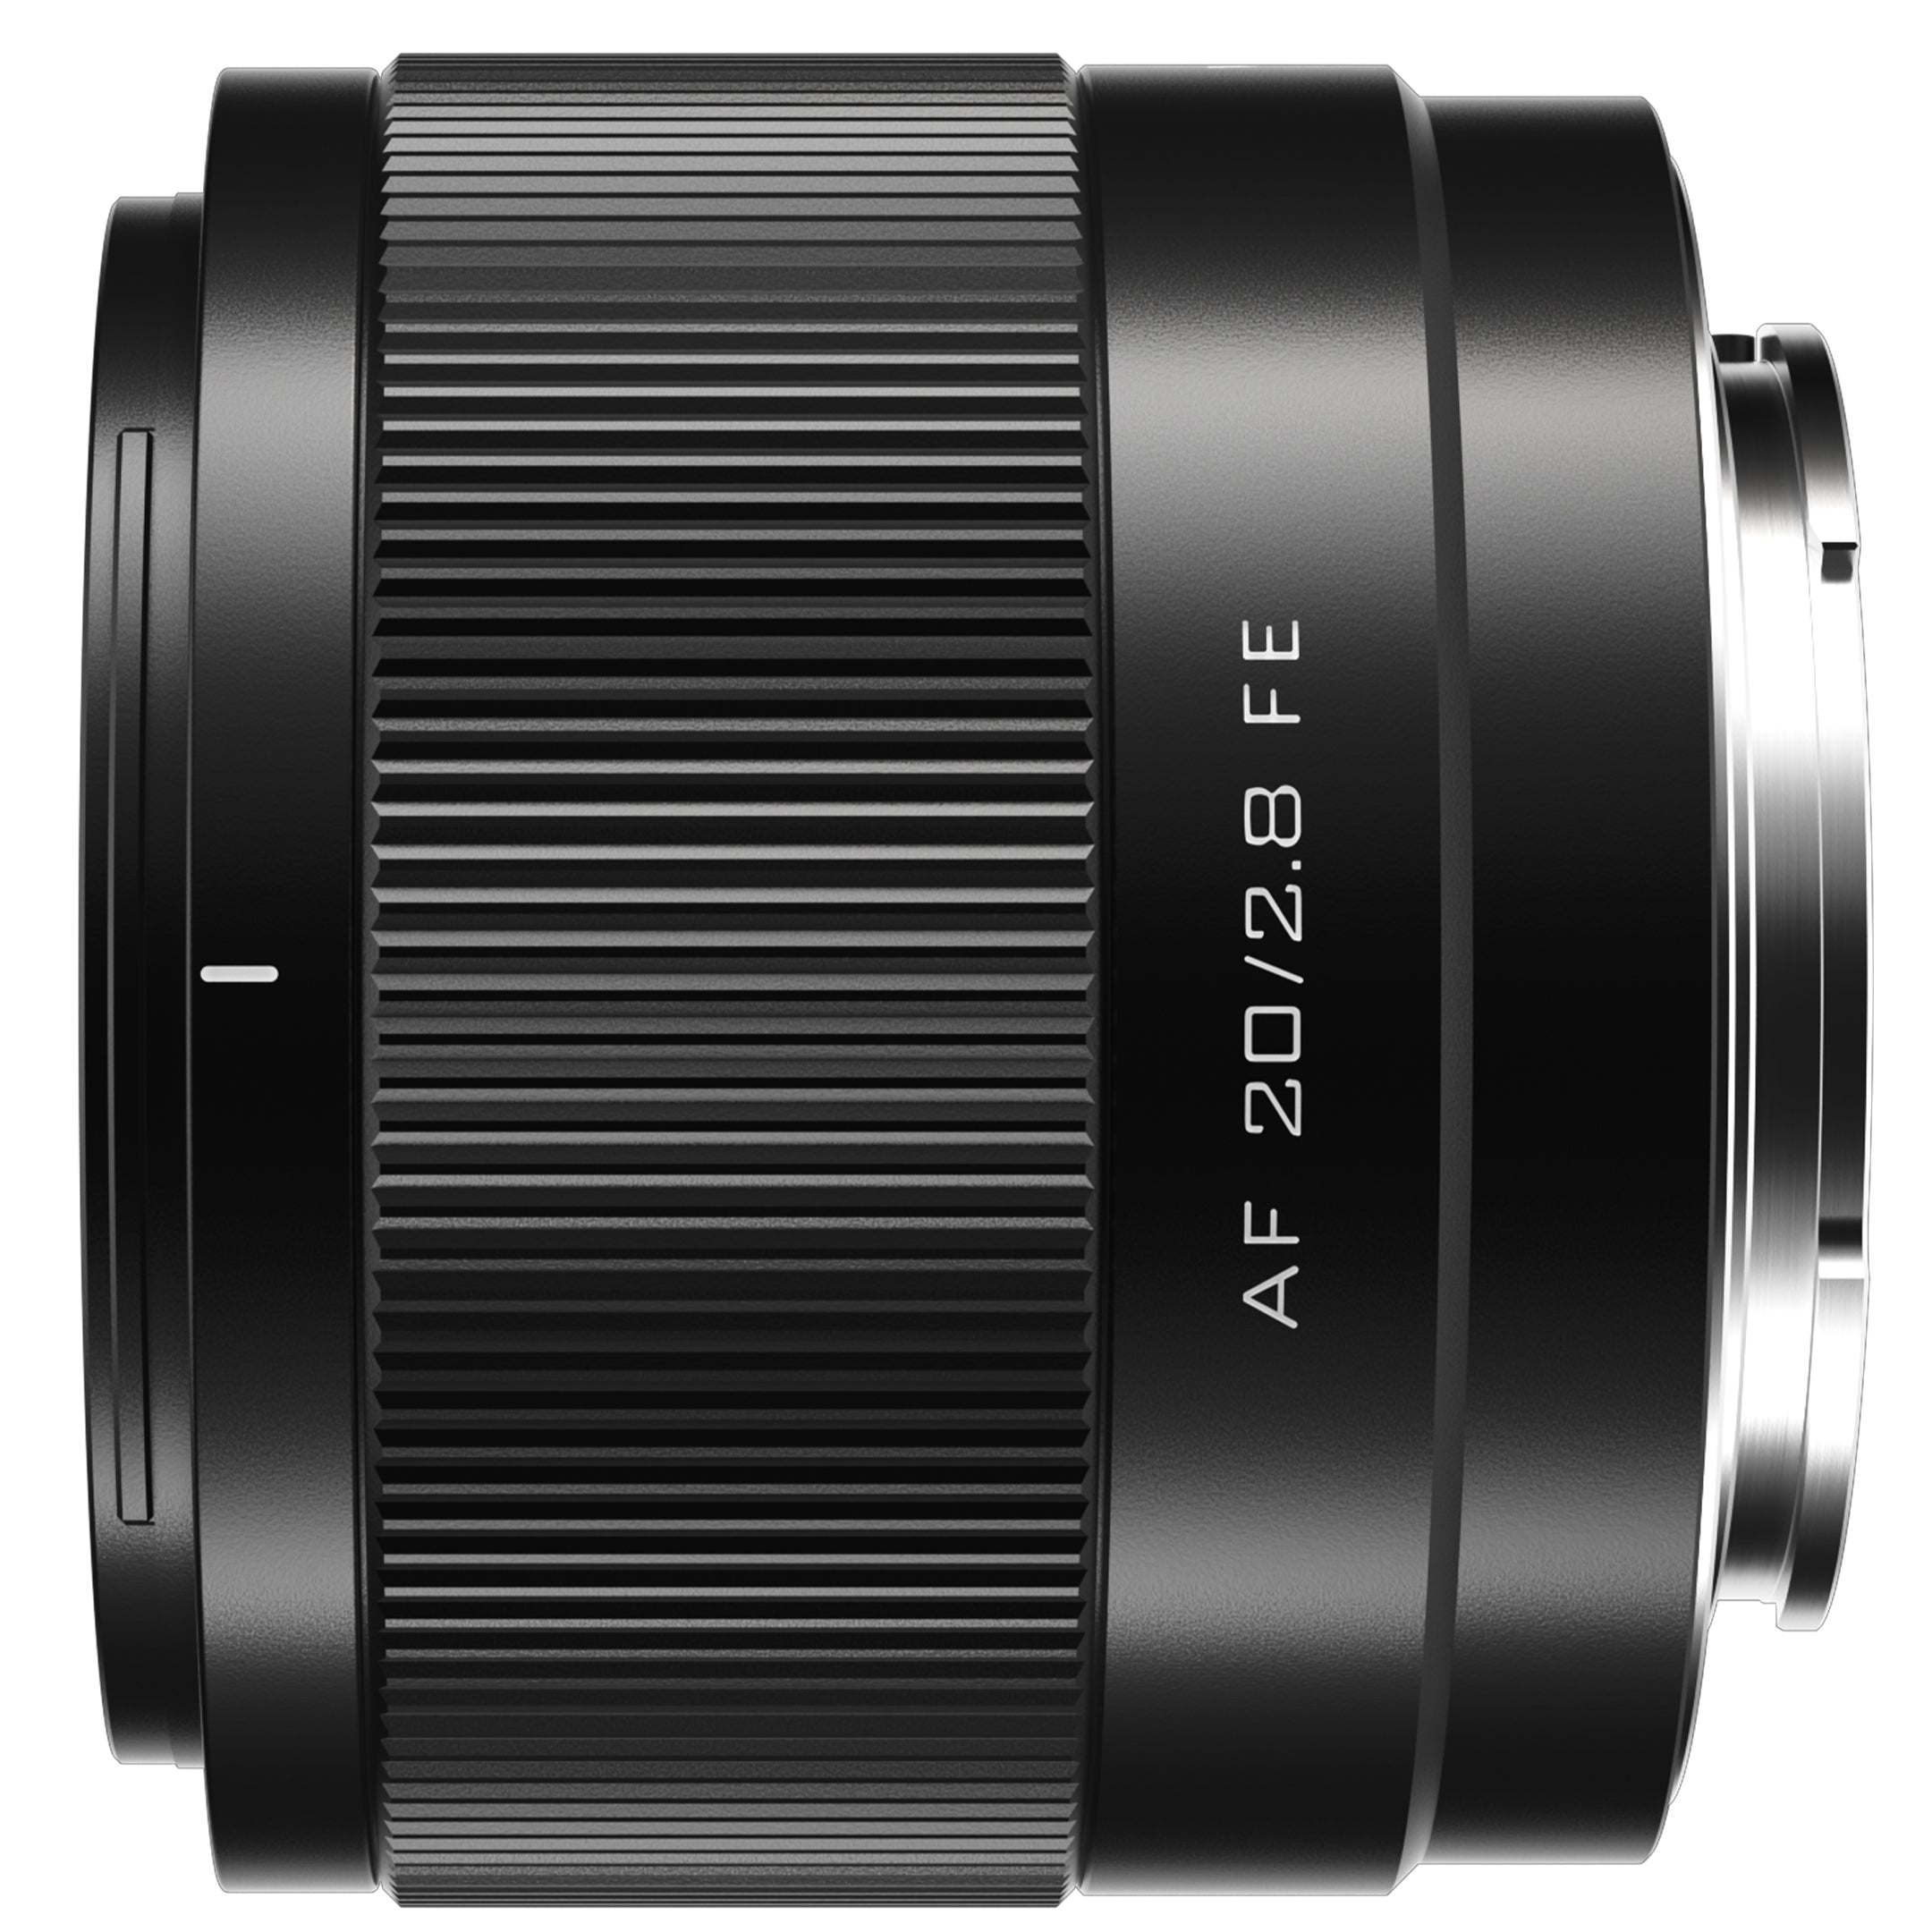 Viltrox AF 20mm F2.8 FE 157g Lighteight Wide Angle Large Aperture Auto Focus Full Frame Prime Lens For Sony E-mount